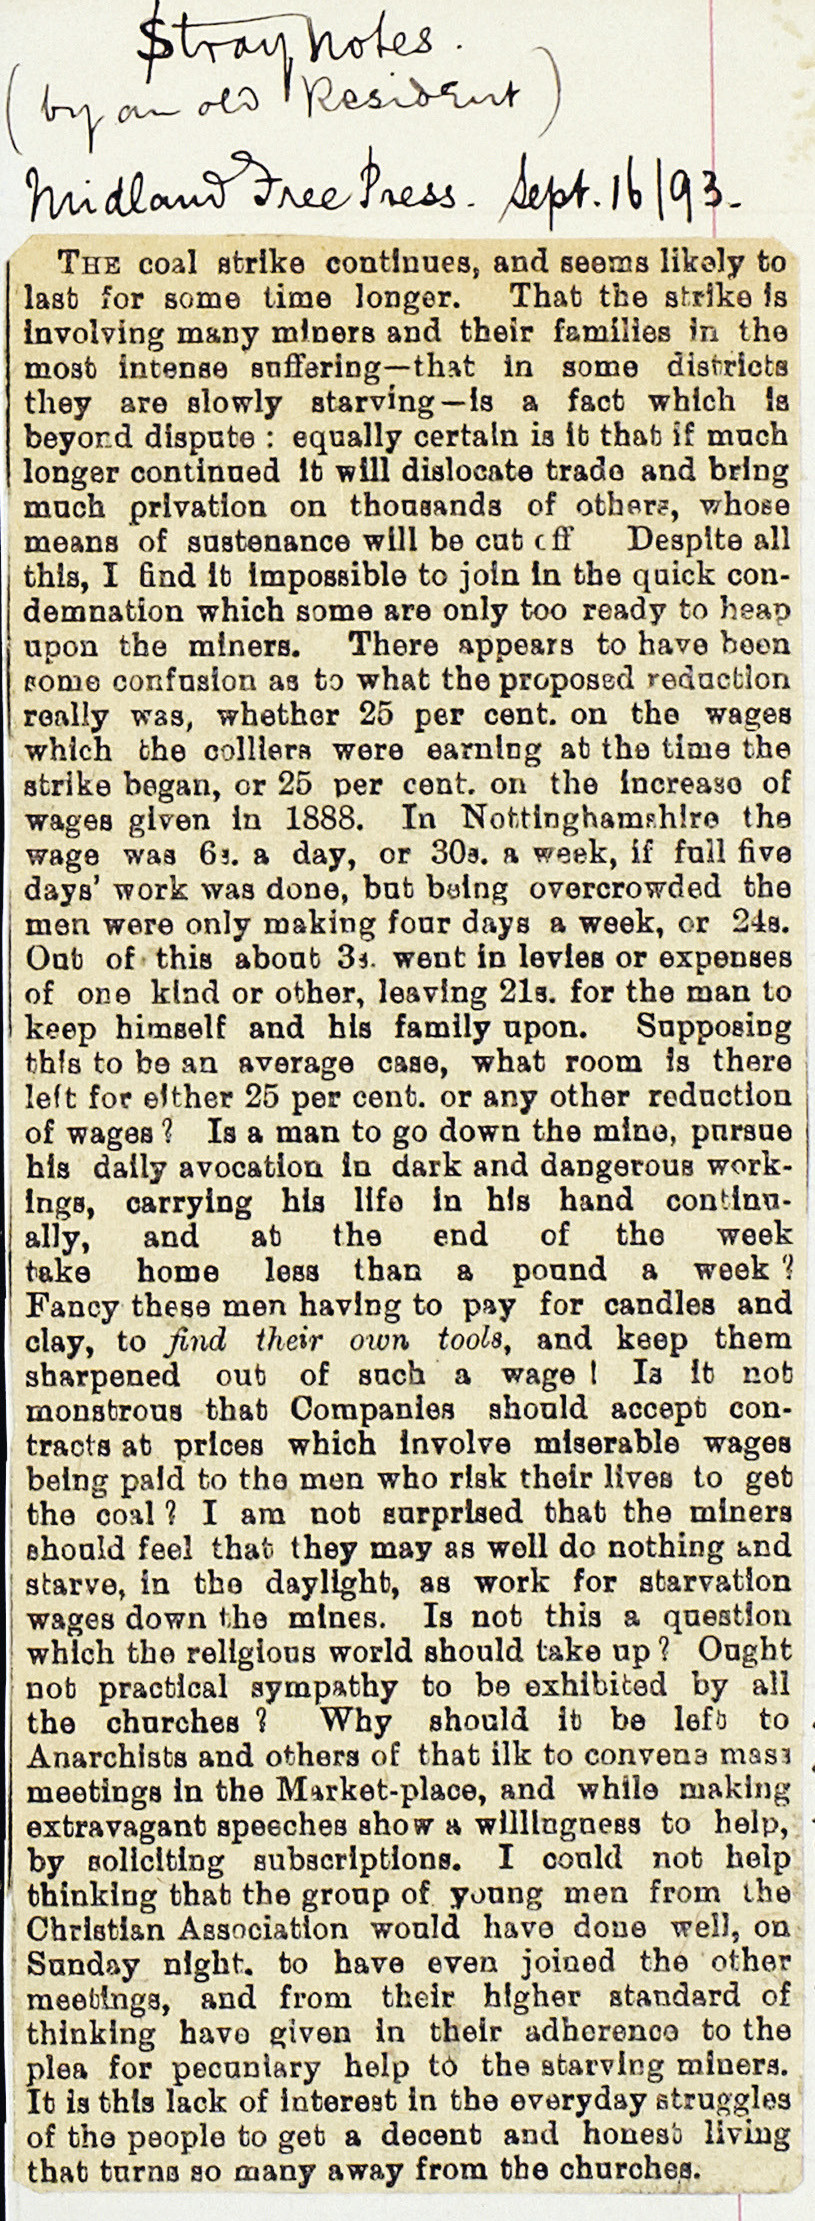 Midland Free Press, 16 September 1893